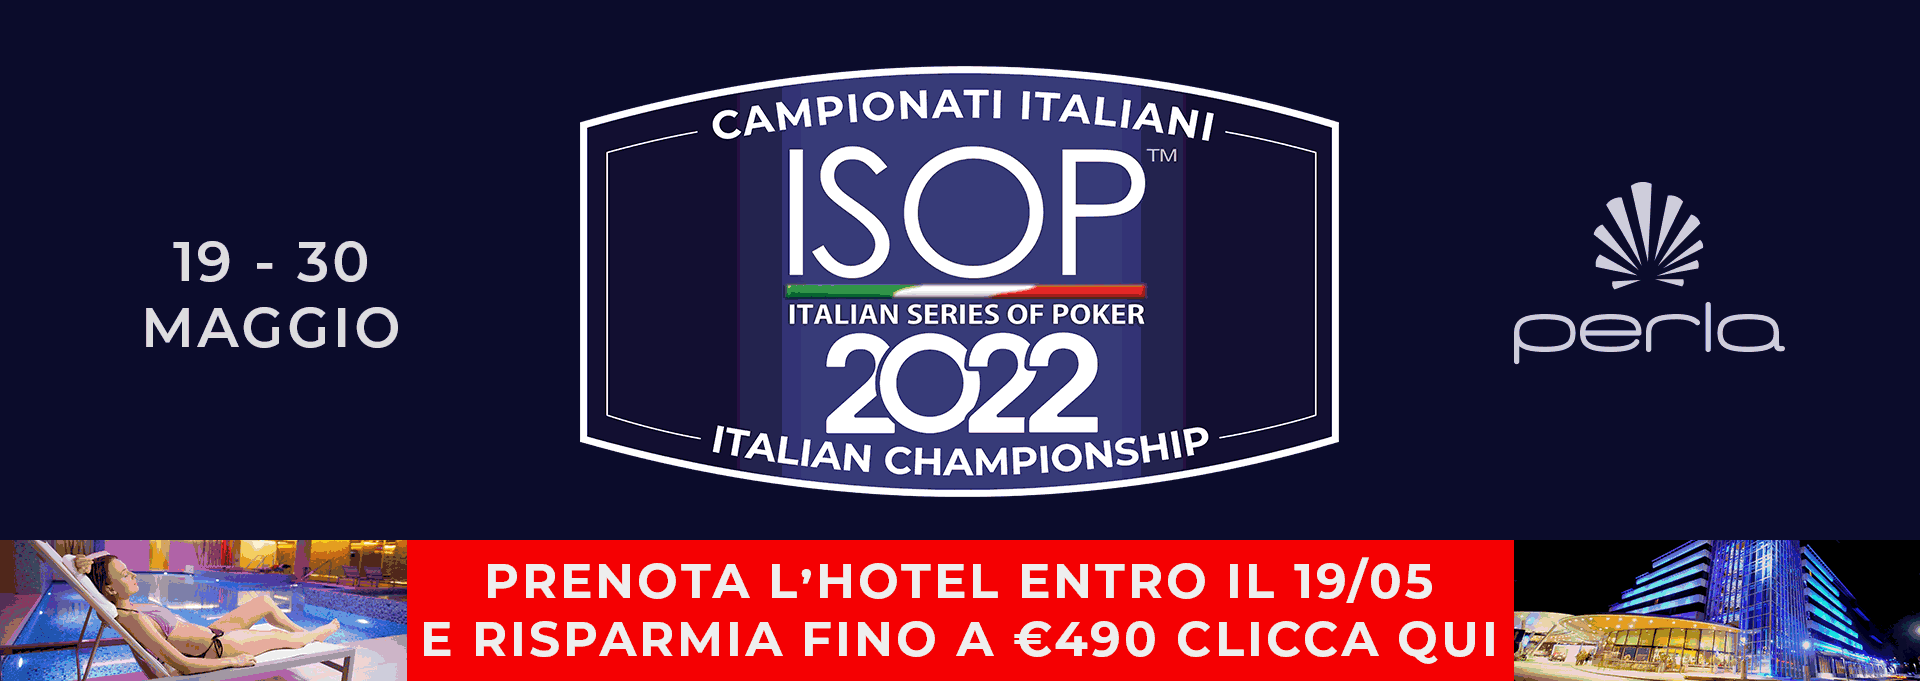 Campionati Italiani 2022